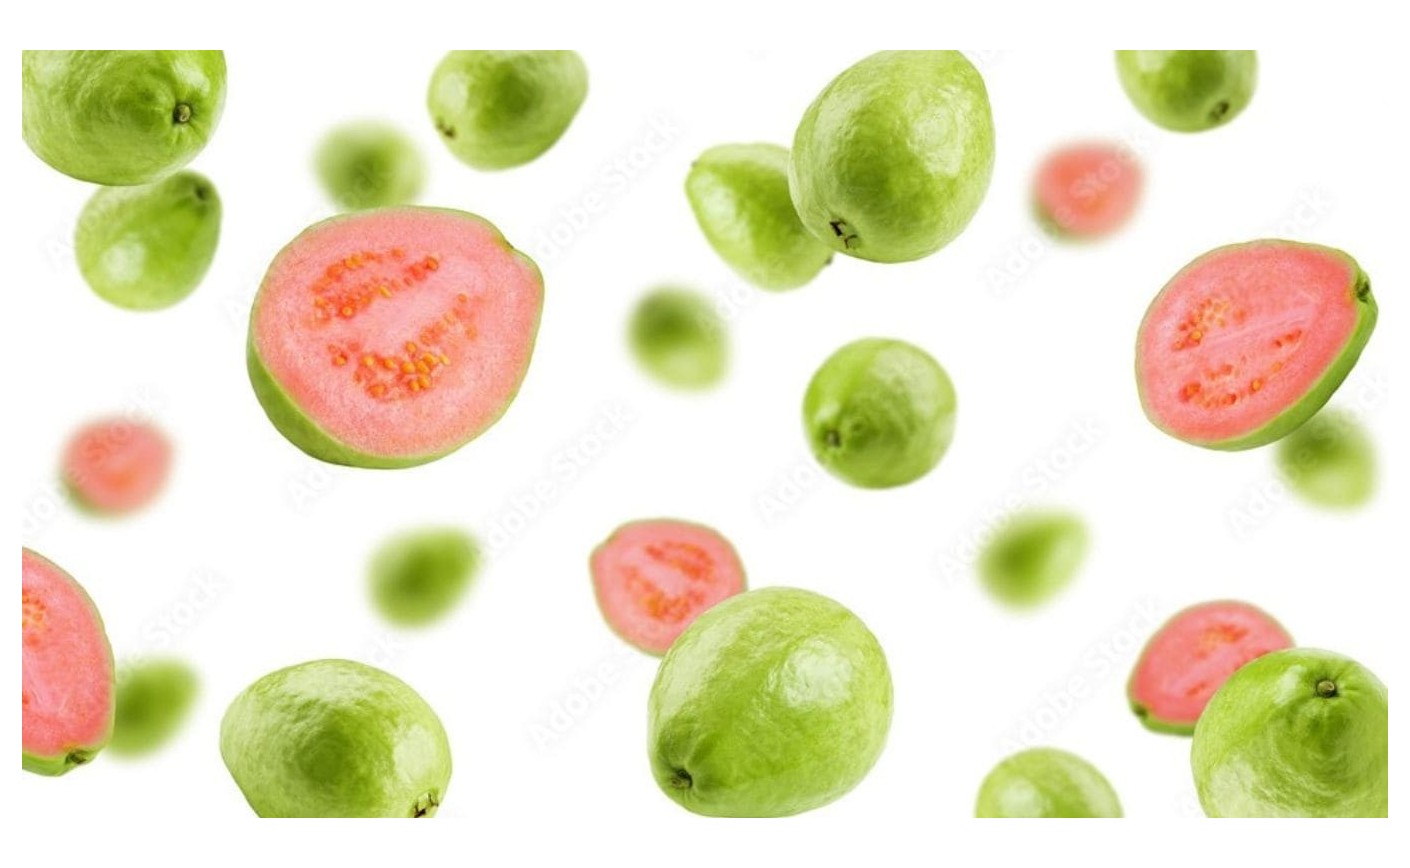 Guava, Amrood, Pera Varieties, Health Benefits & Growing Guide